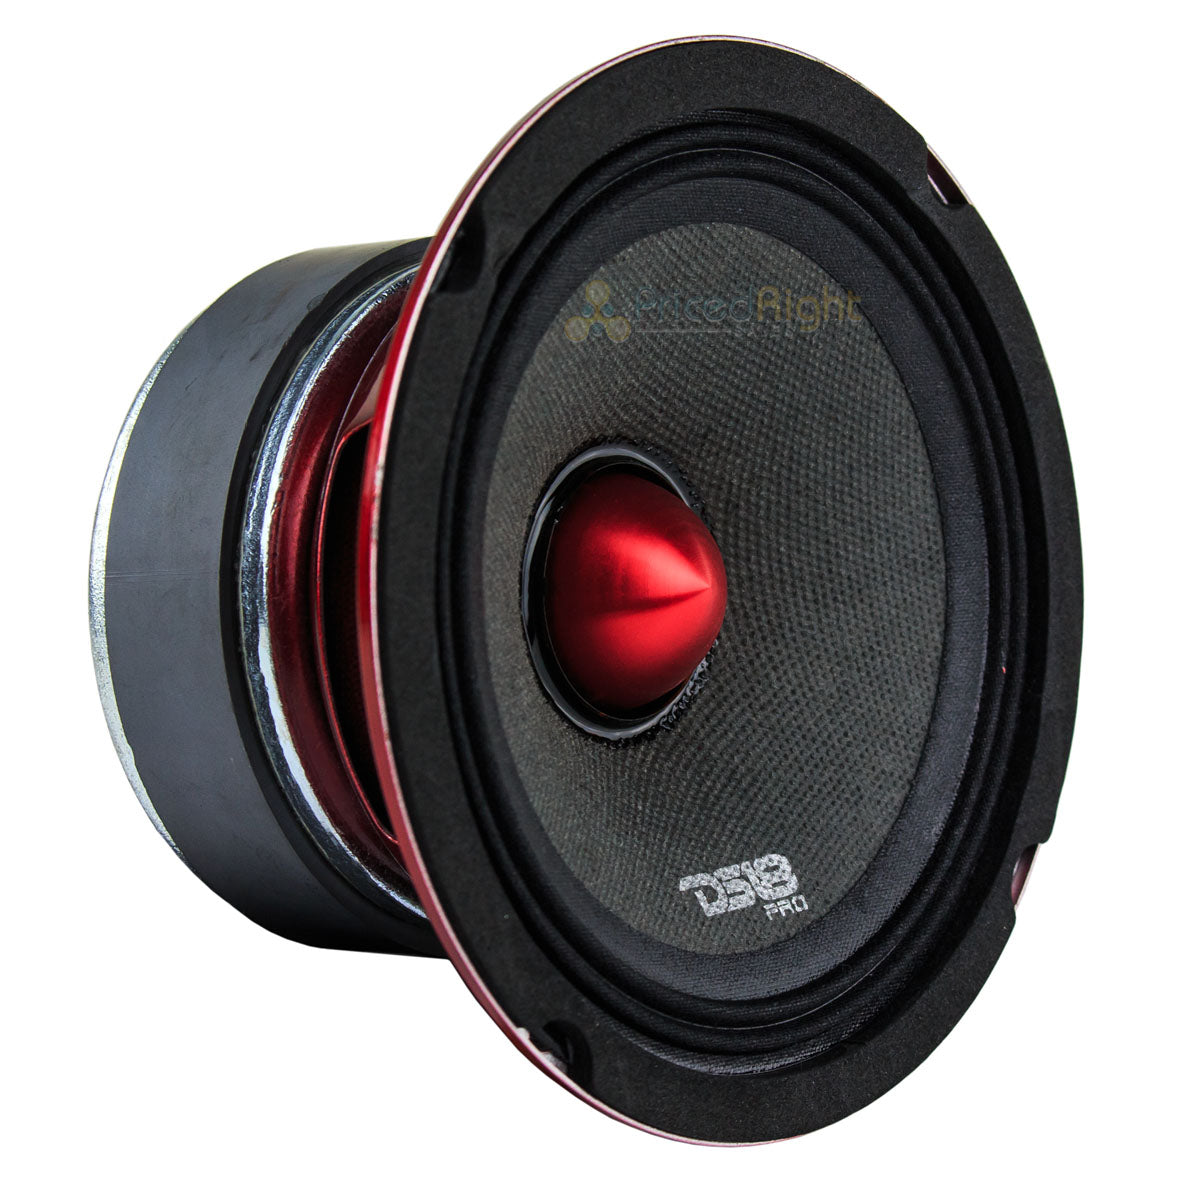 4 DS18 PRO-X5.4BM 300W Max 5.25" Midrange Loud Speakers 4 Ohm High Strength New